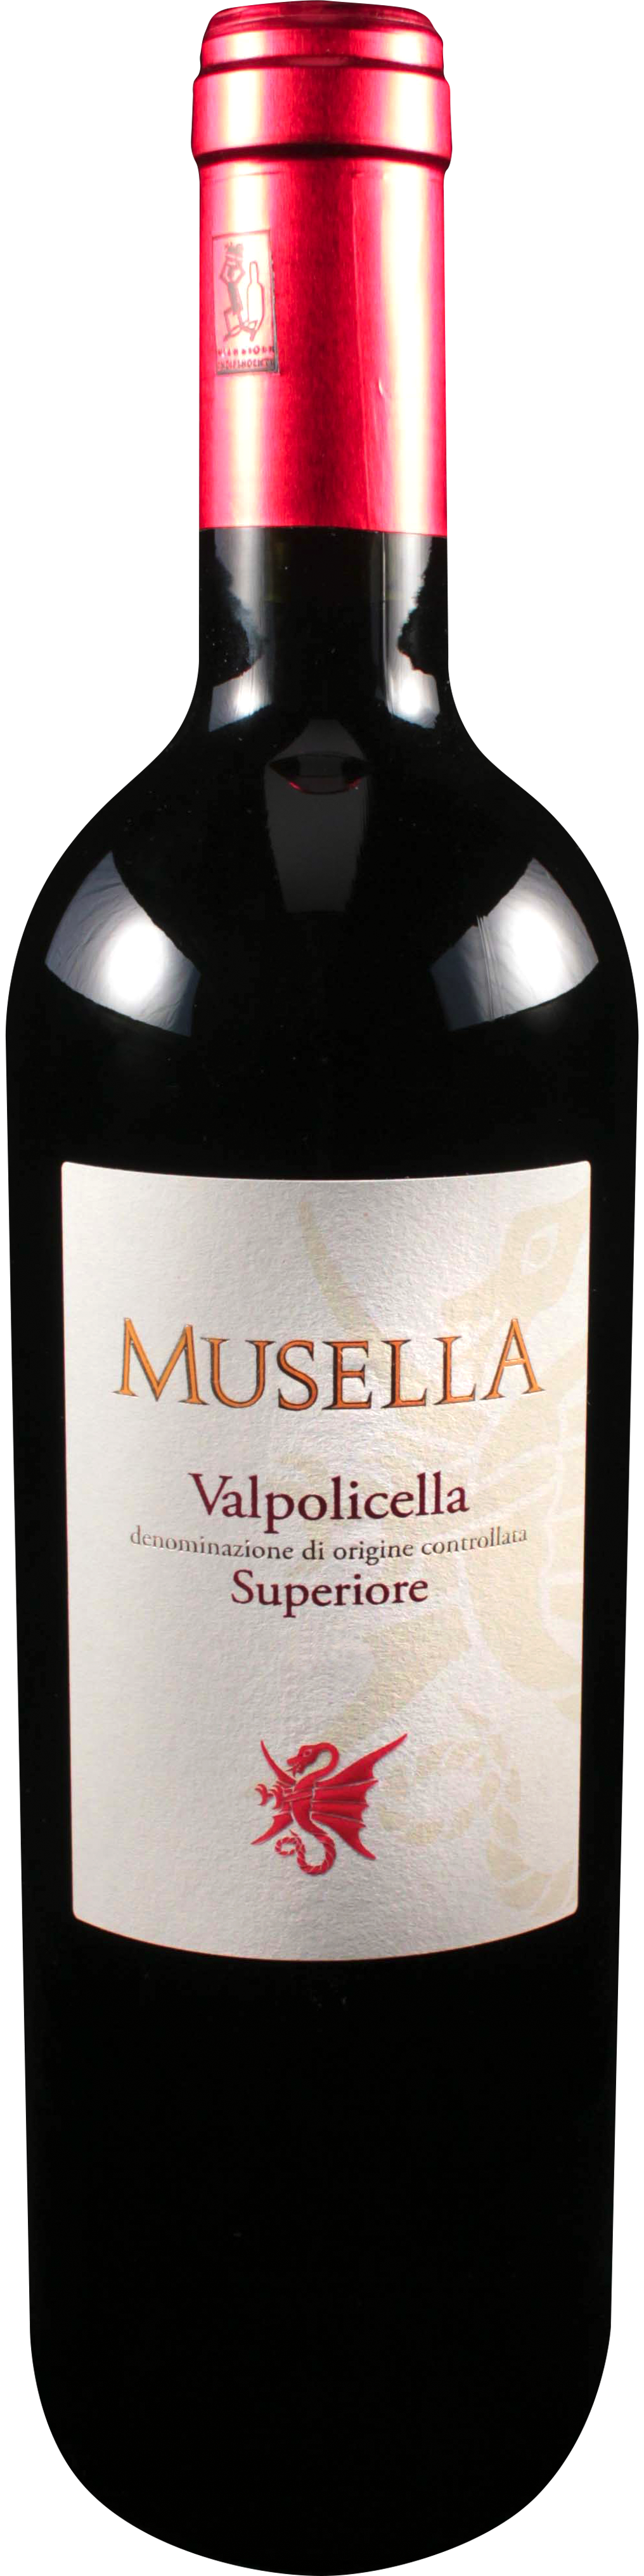 Bottle shot of 2011 Valpolicella Superiore